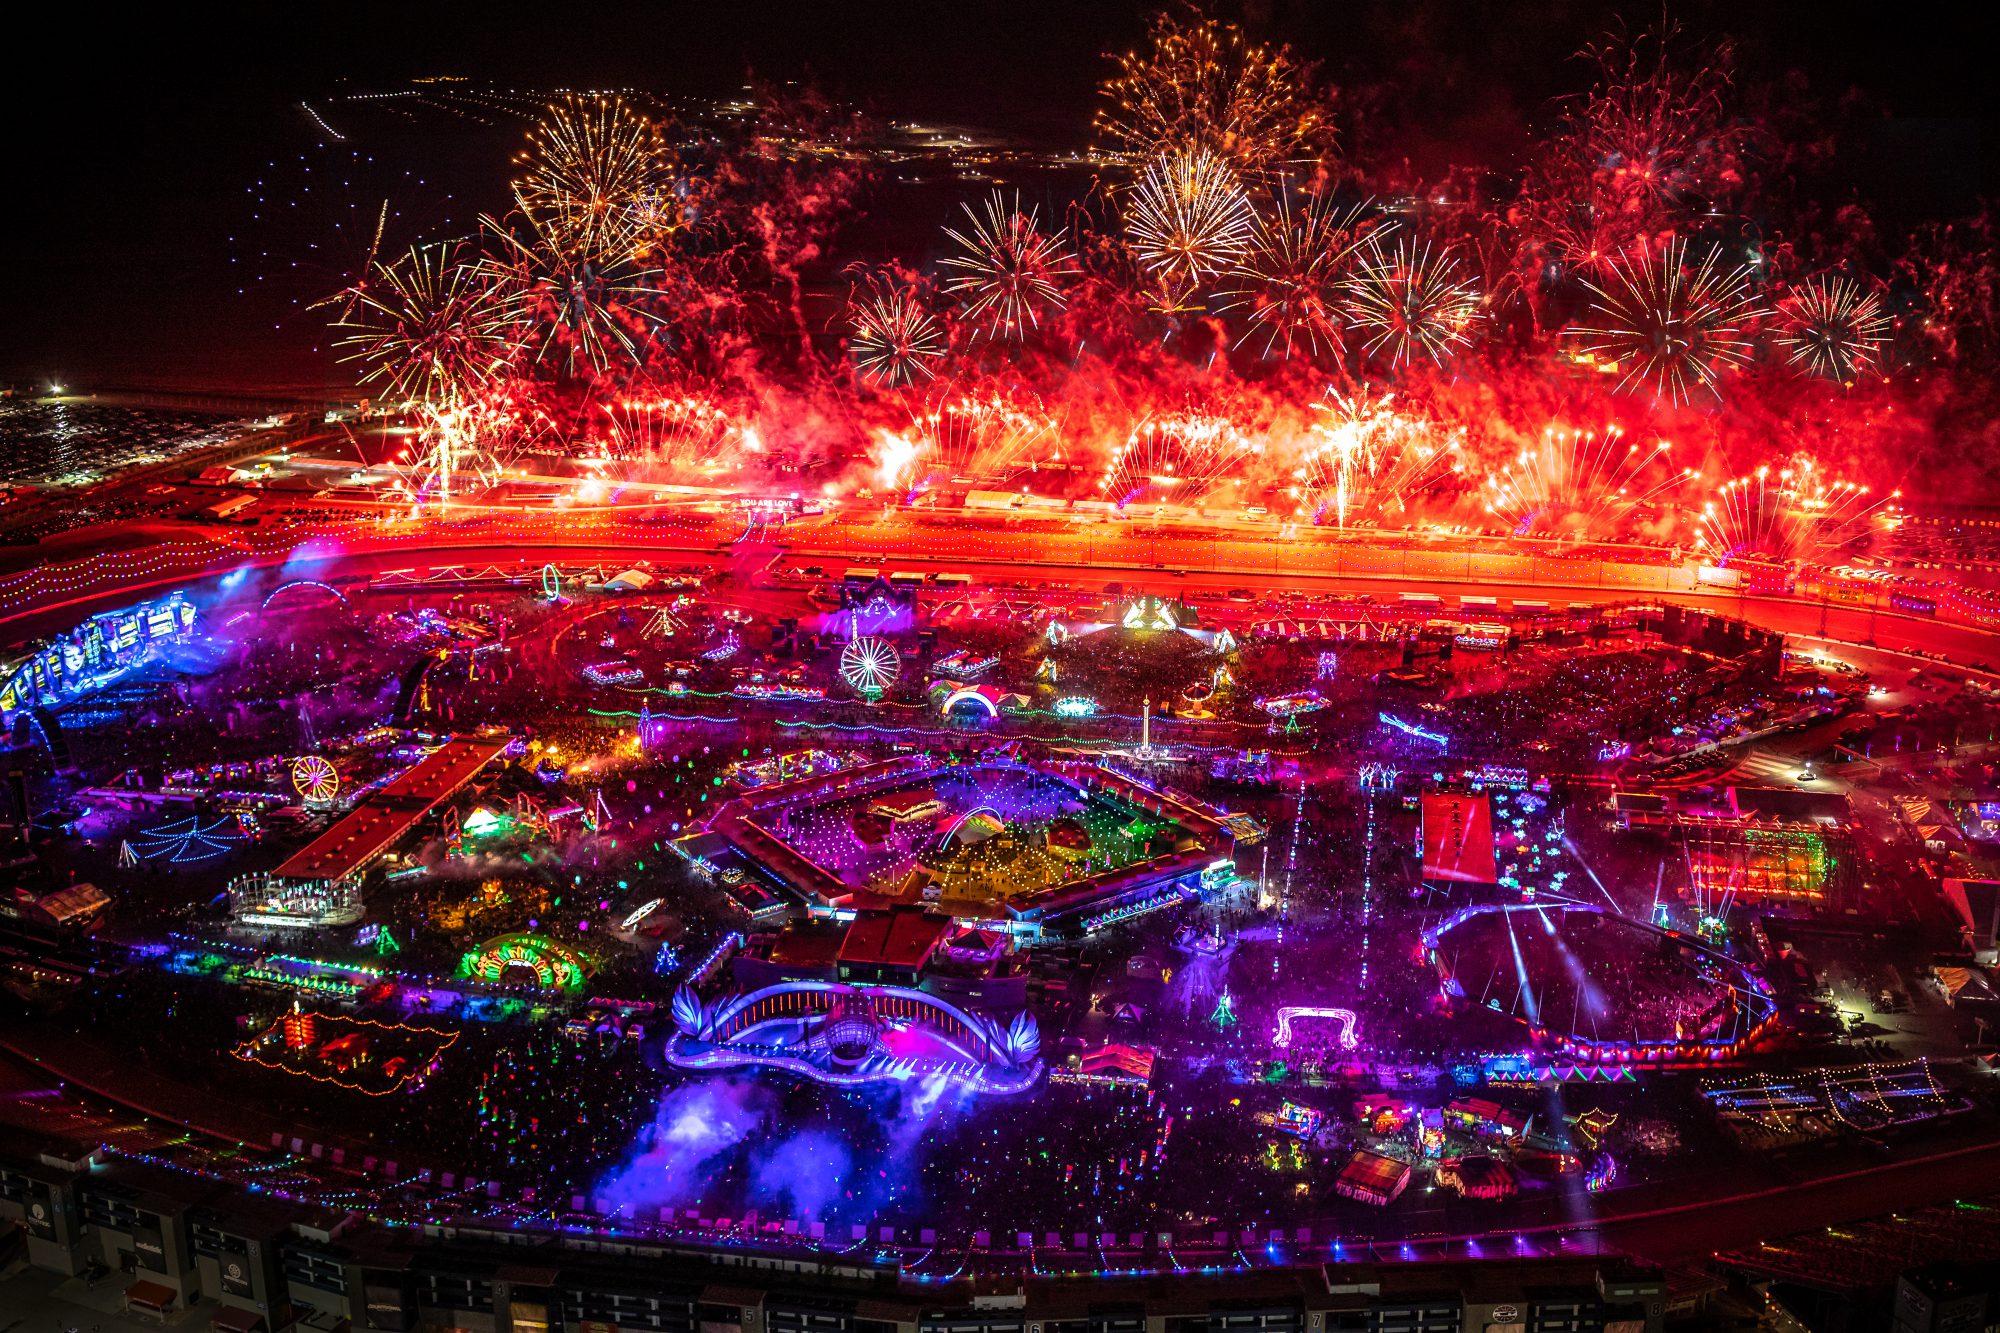 EDC Las Vegas 2019 - Aerial - Day 01 Fireworks